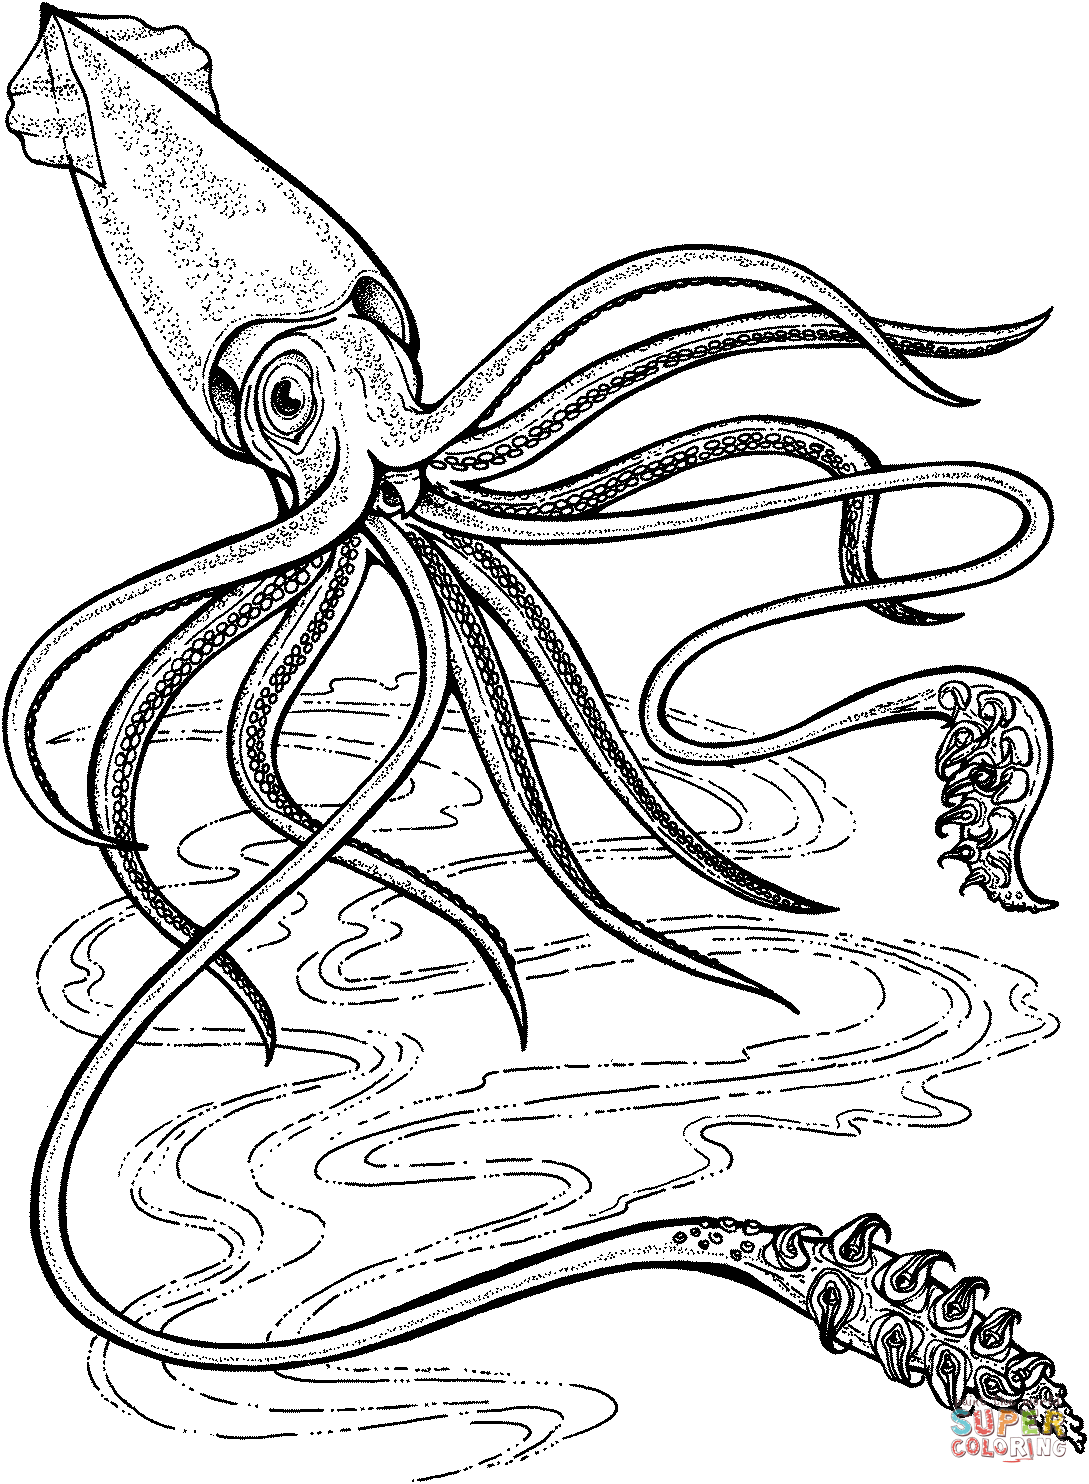 Squid coloring #11, Download drawings